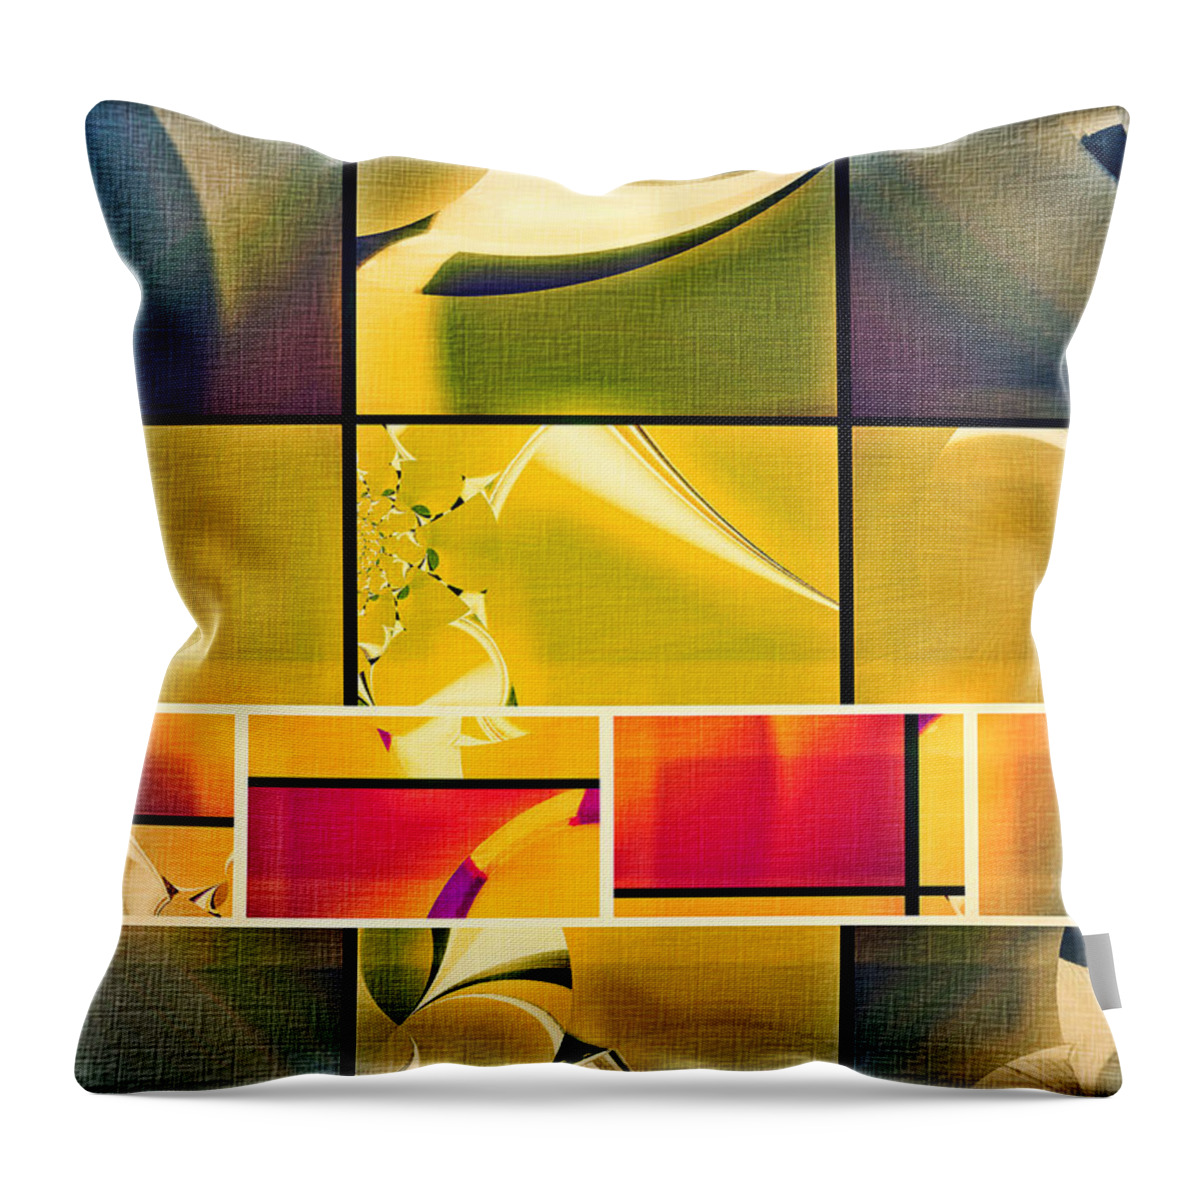 Geometric Art Throw Pillow featuring the digital art Mod 162 by Aurelio Zucco